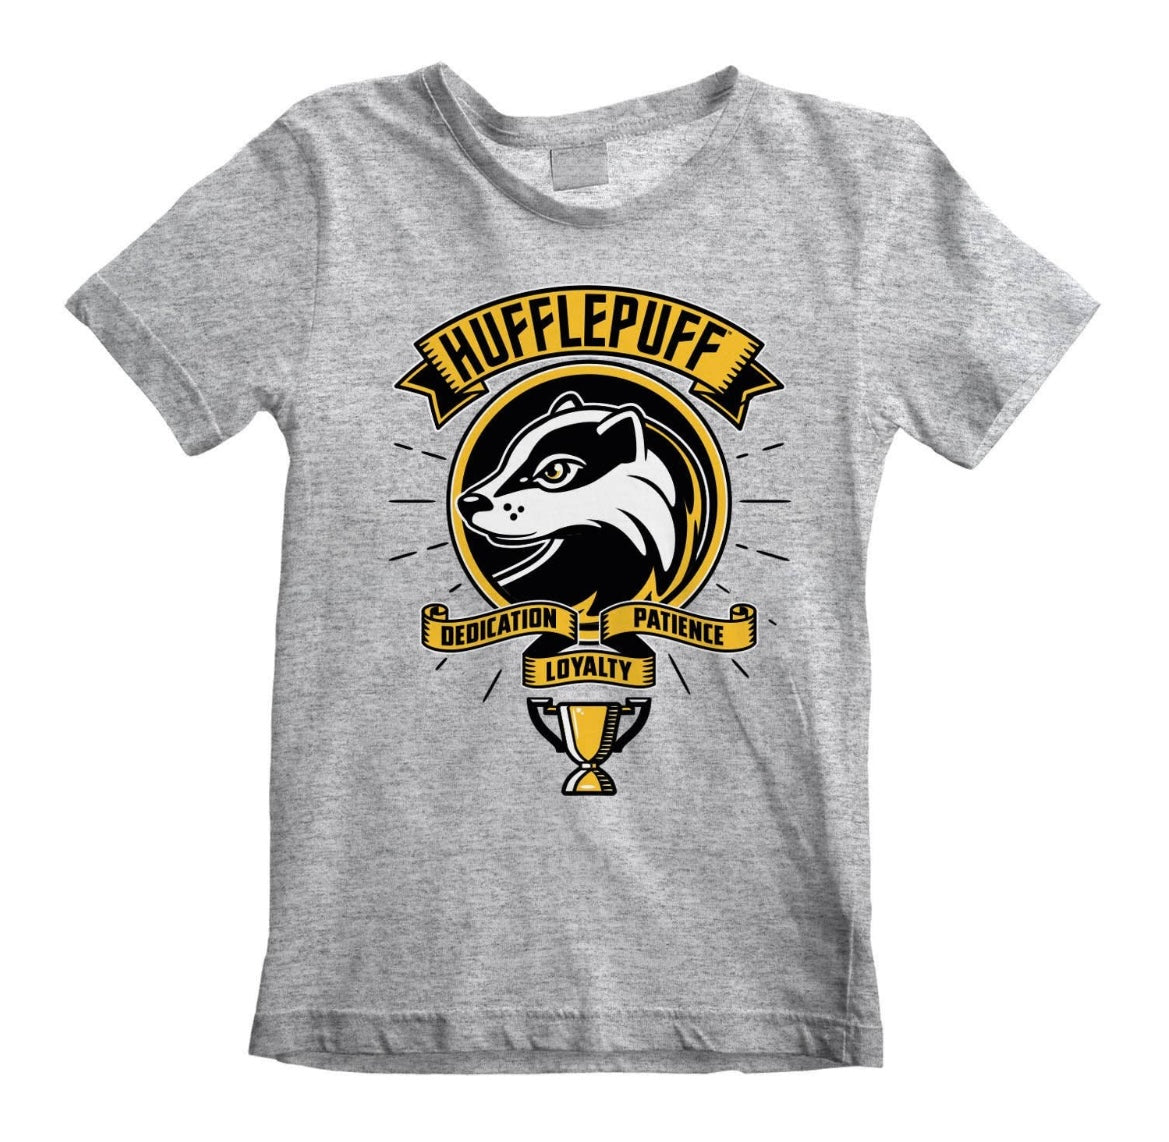 Hufflepuff T Shirt (kids)